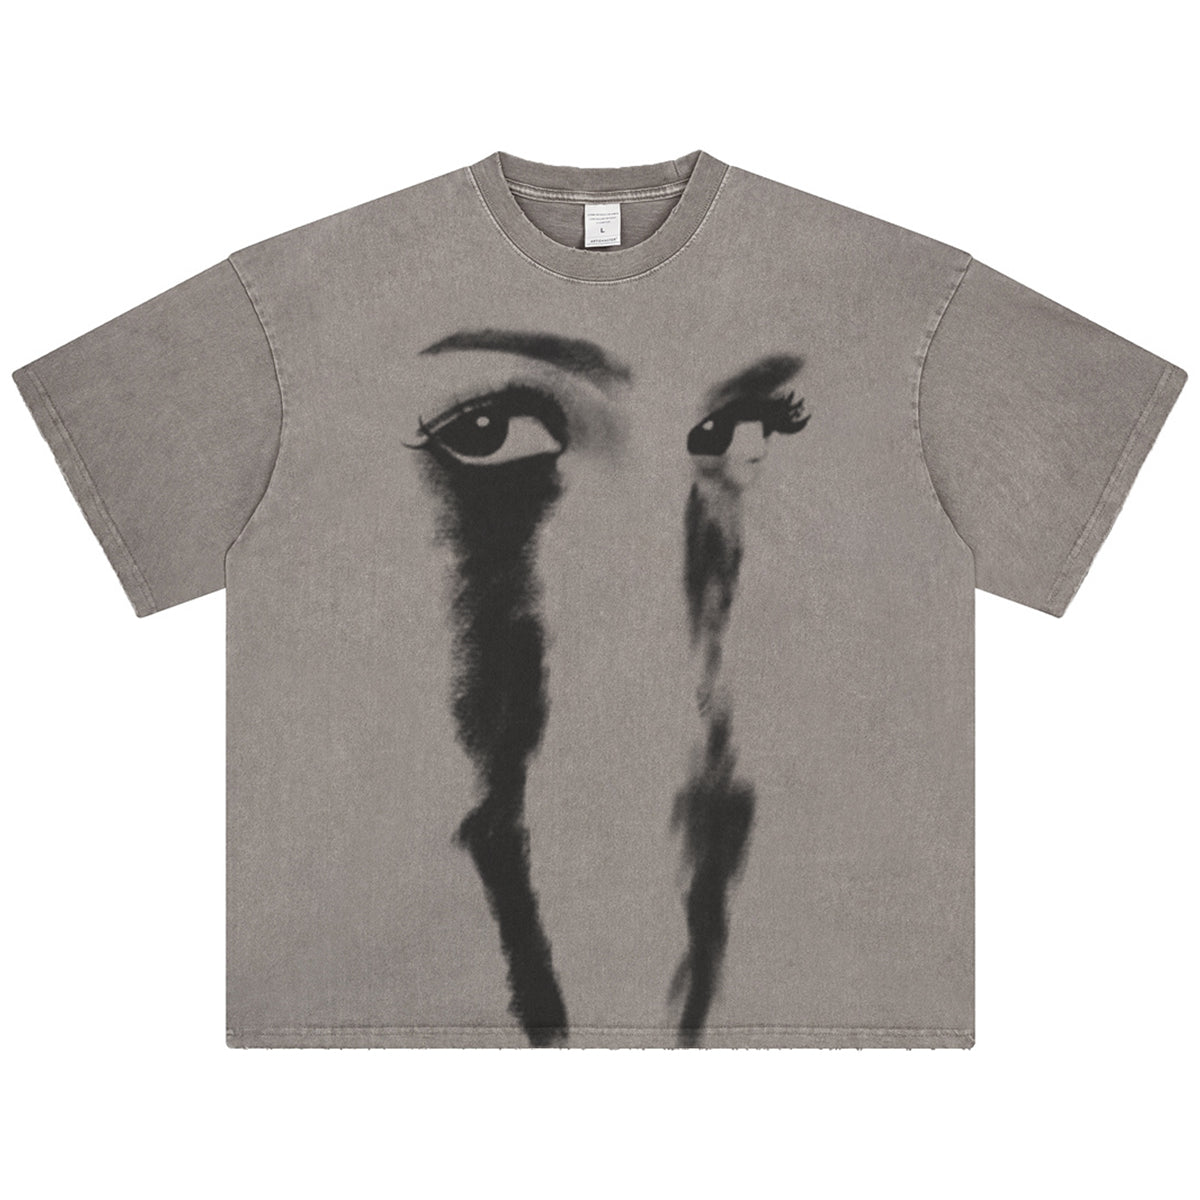 'Tears' T shirt - Santo 